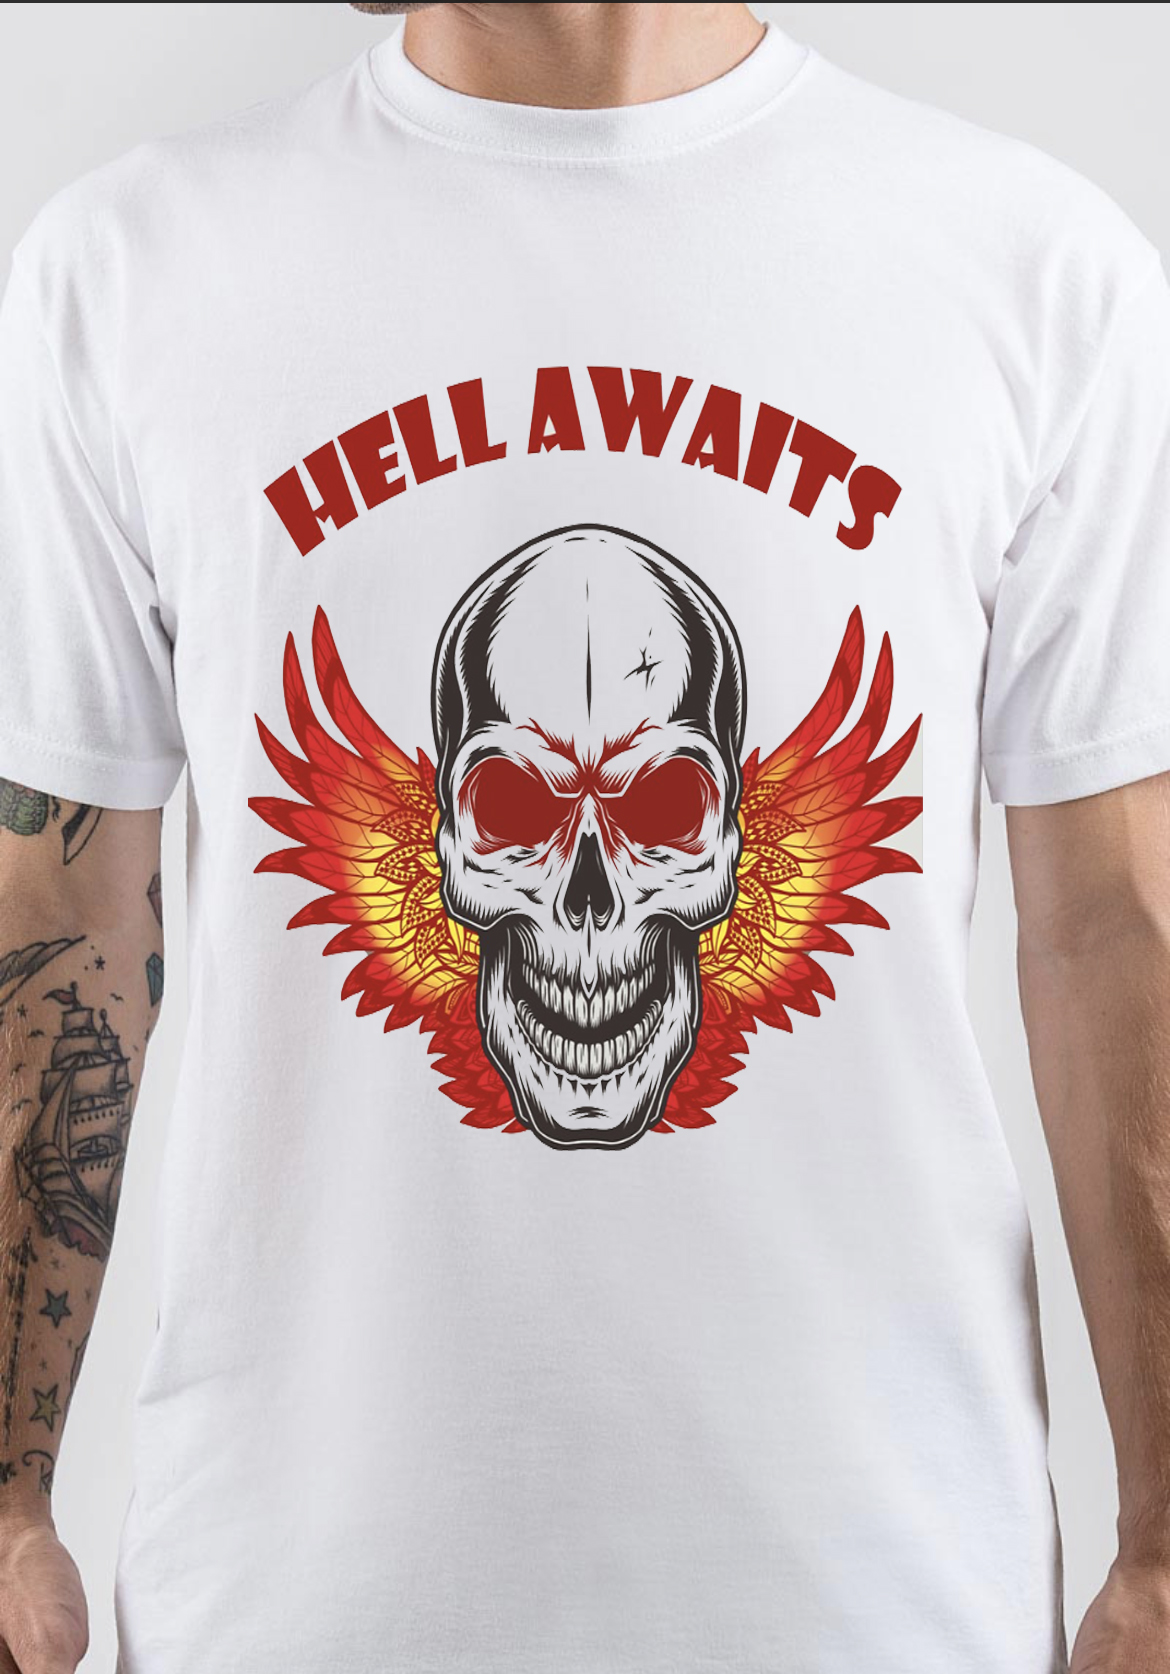 Hell Awaits T-Shirt And Merchandise